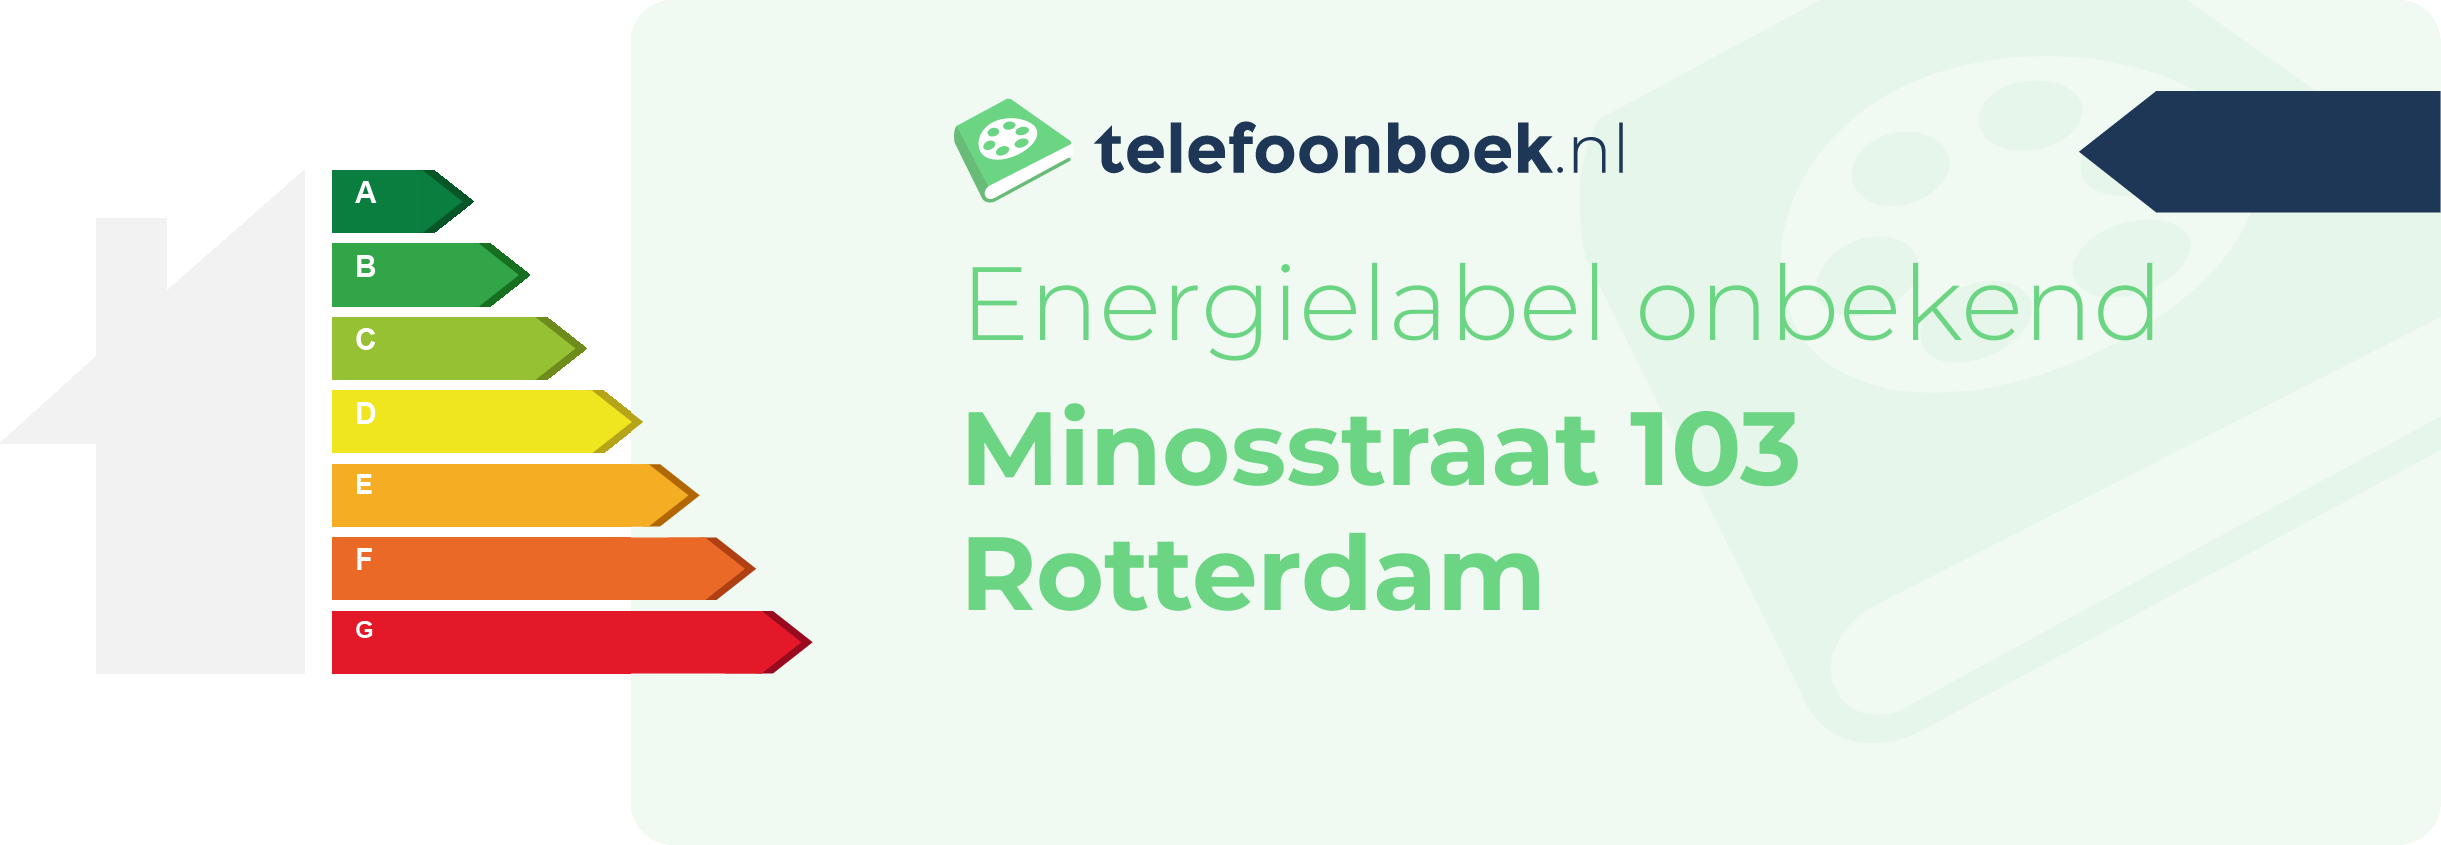 Energielabel Minosstraat 103 Rotterdam